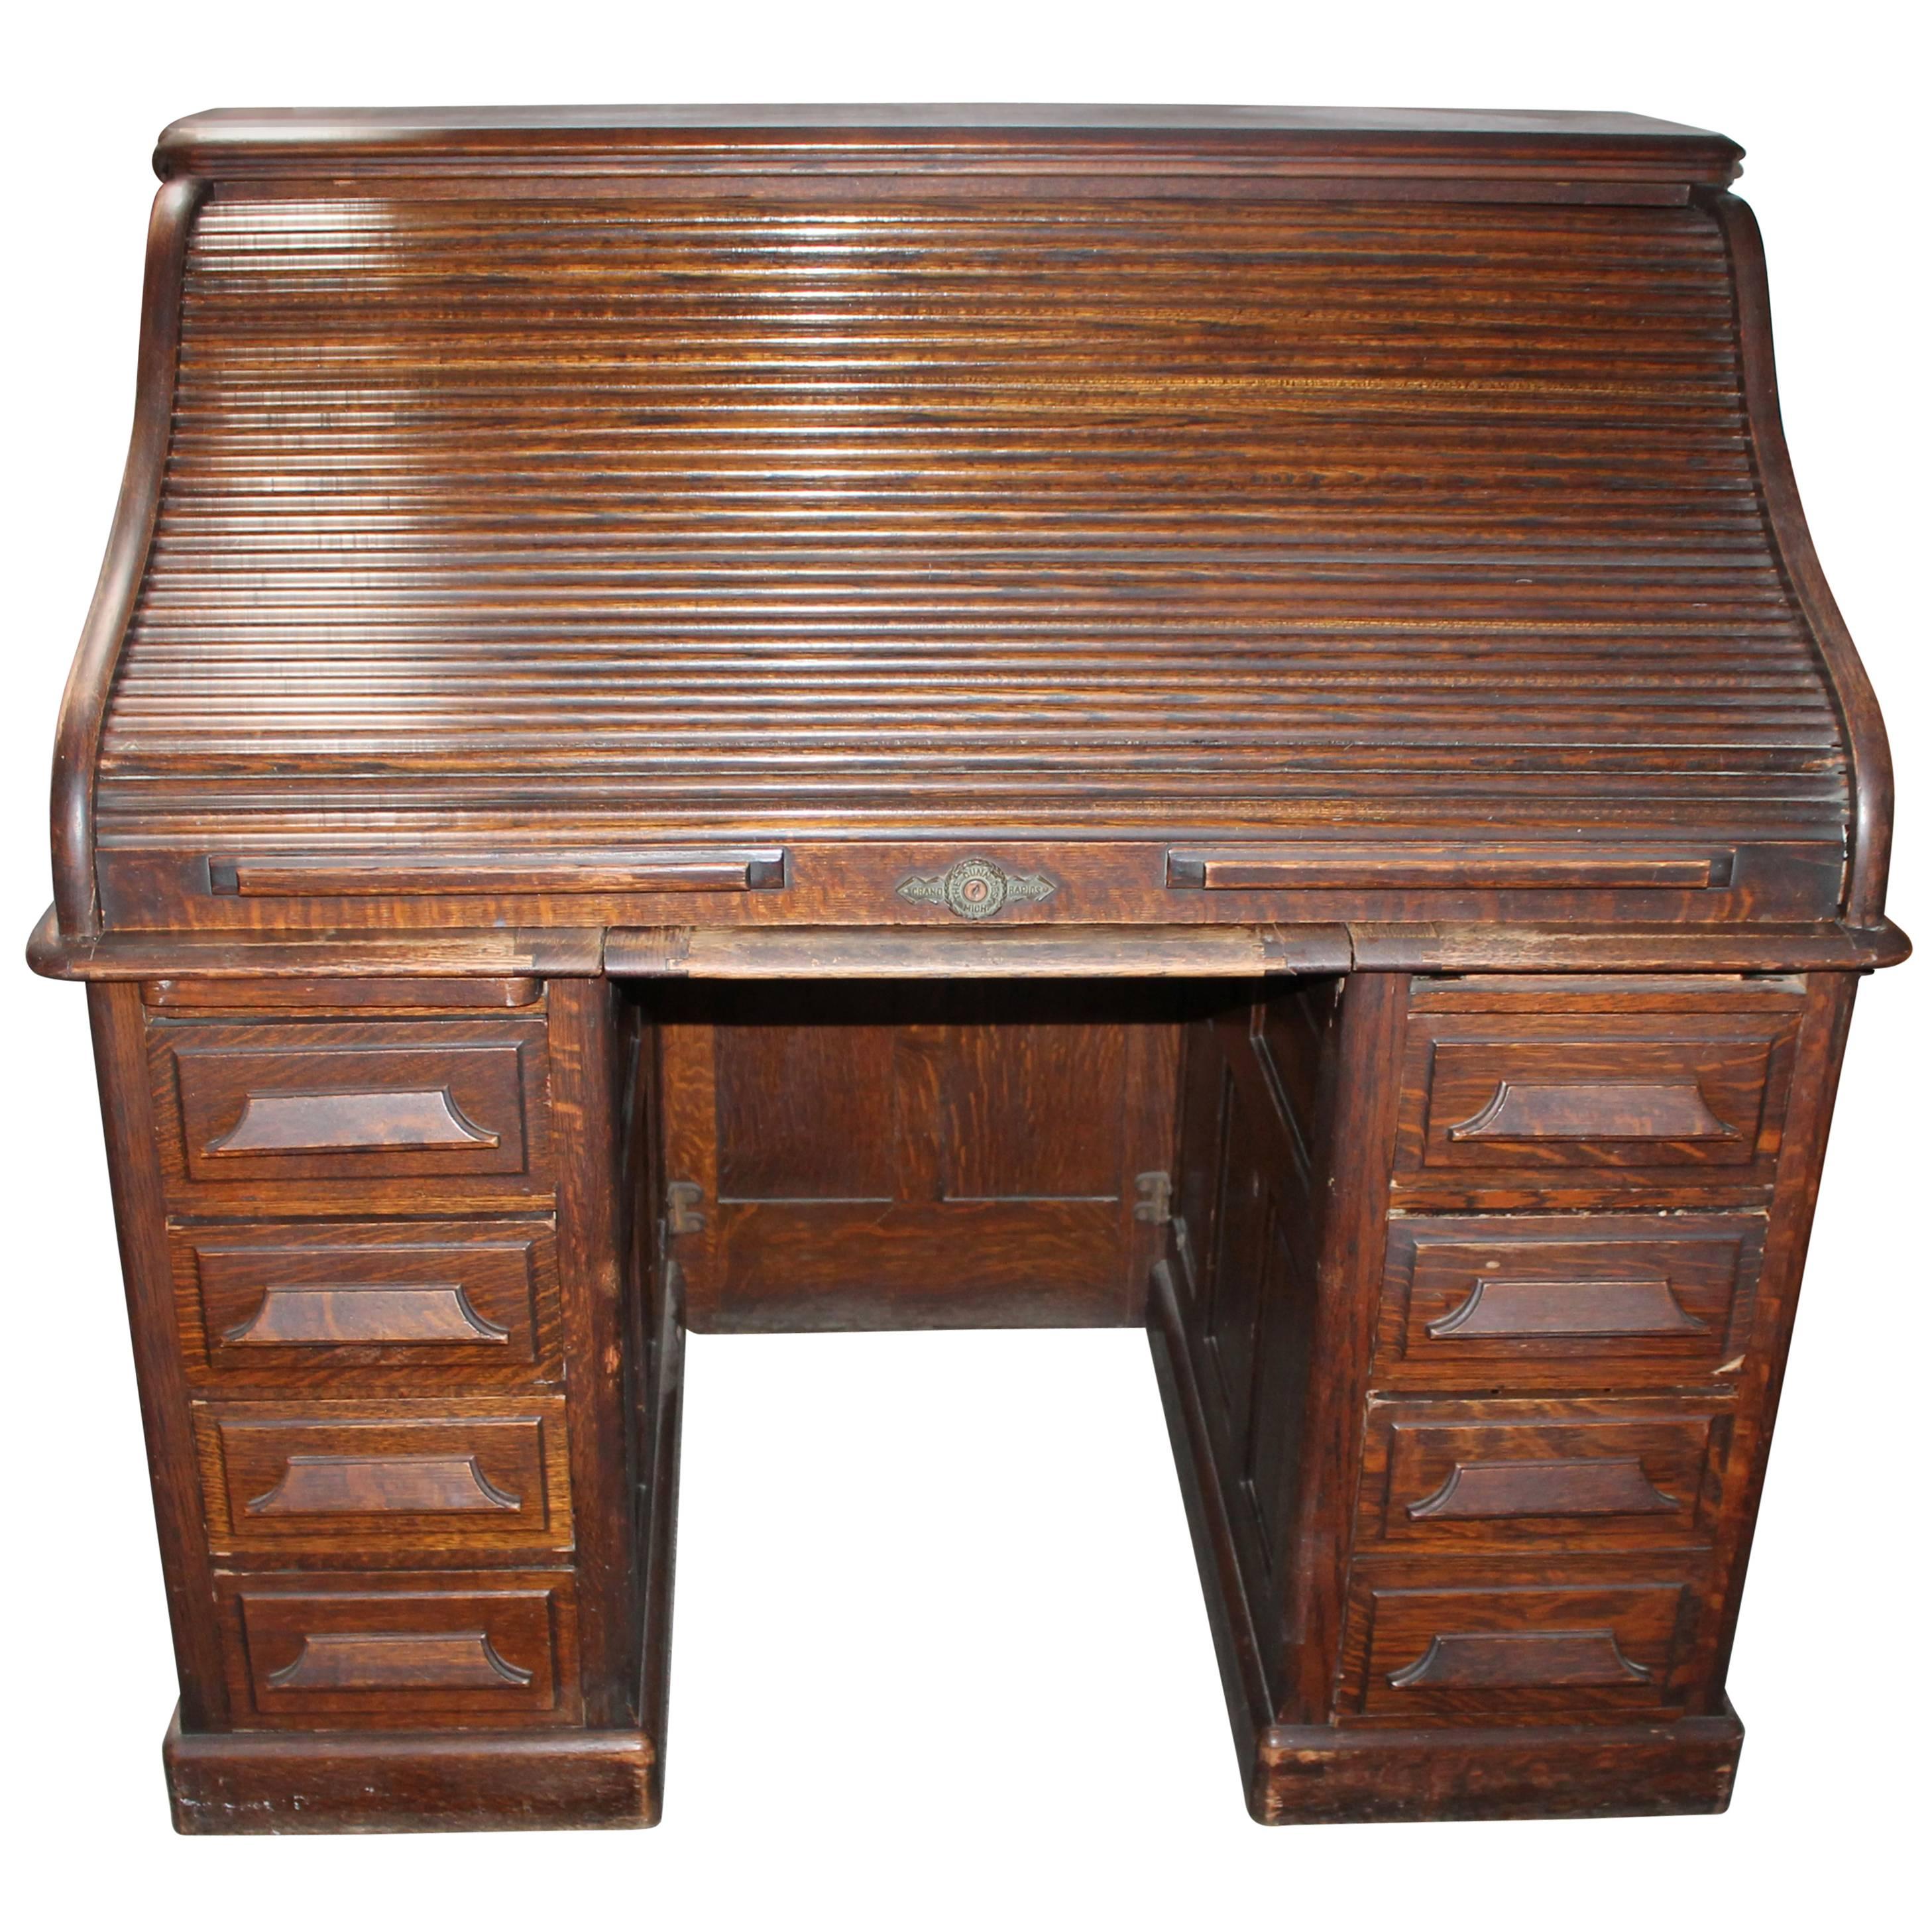 Late 19th Century Gunn Furniture Co Roll Top Desk